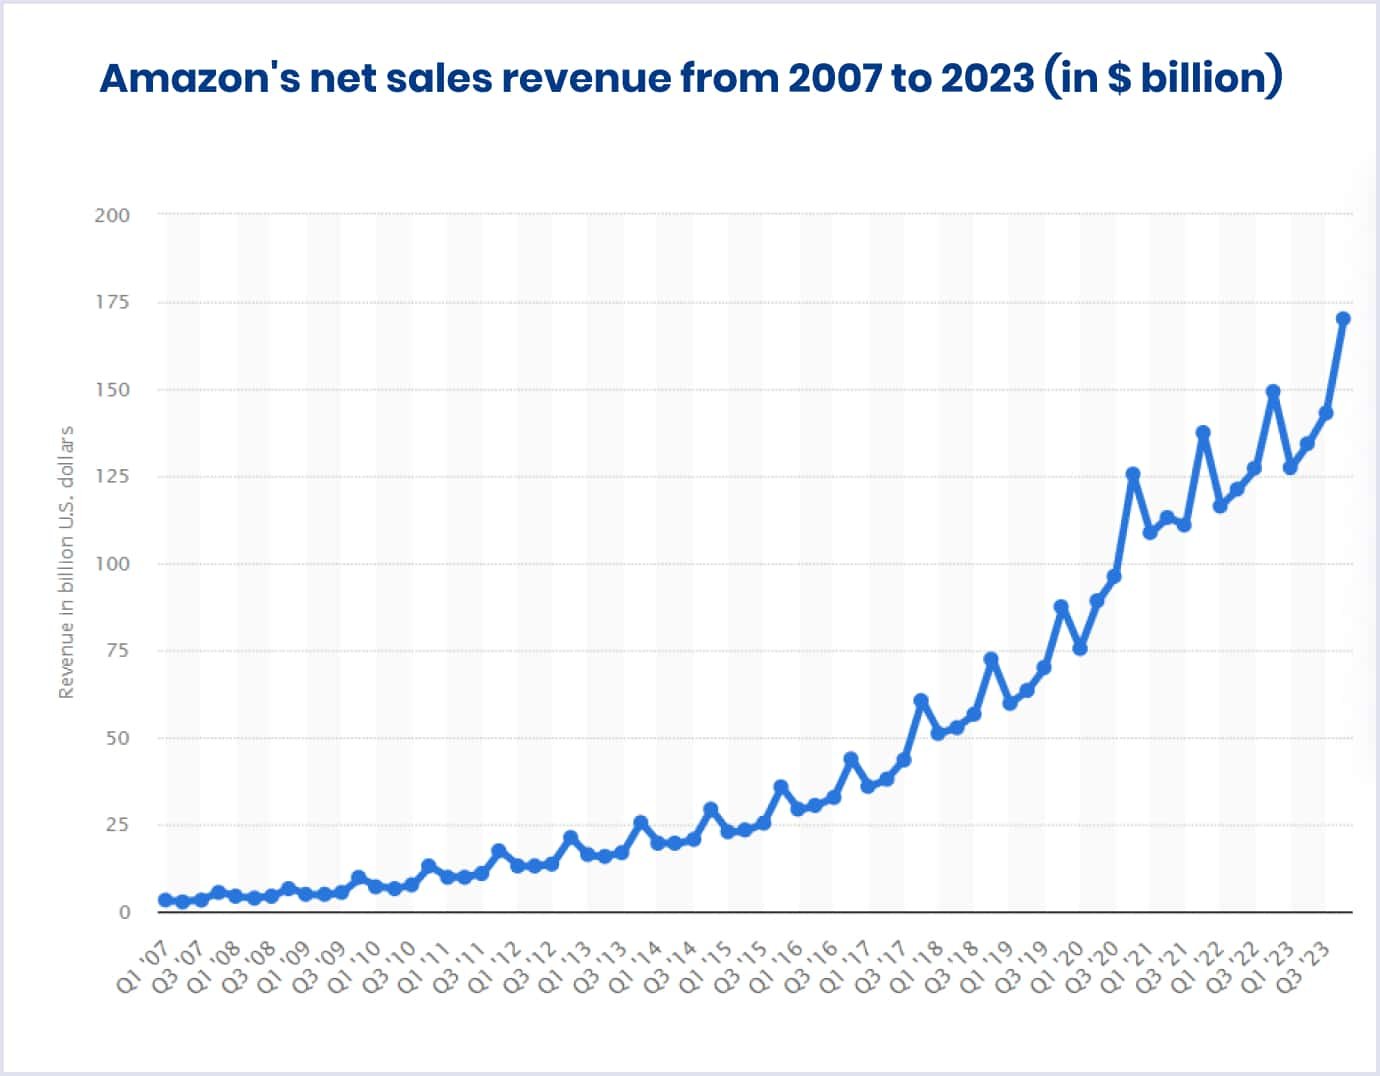 Net sales revenue of Amazon from 1st quarter 2007 to 4th quarter 2023 (in $ billion)